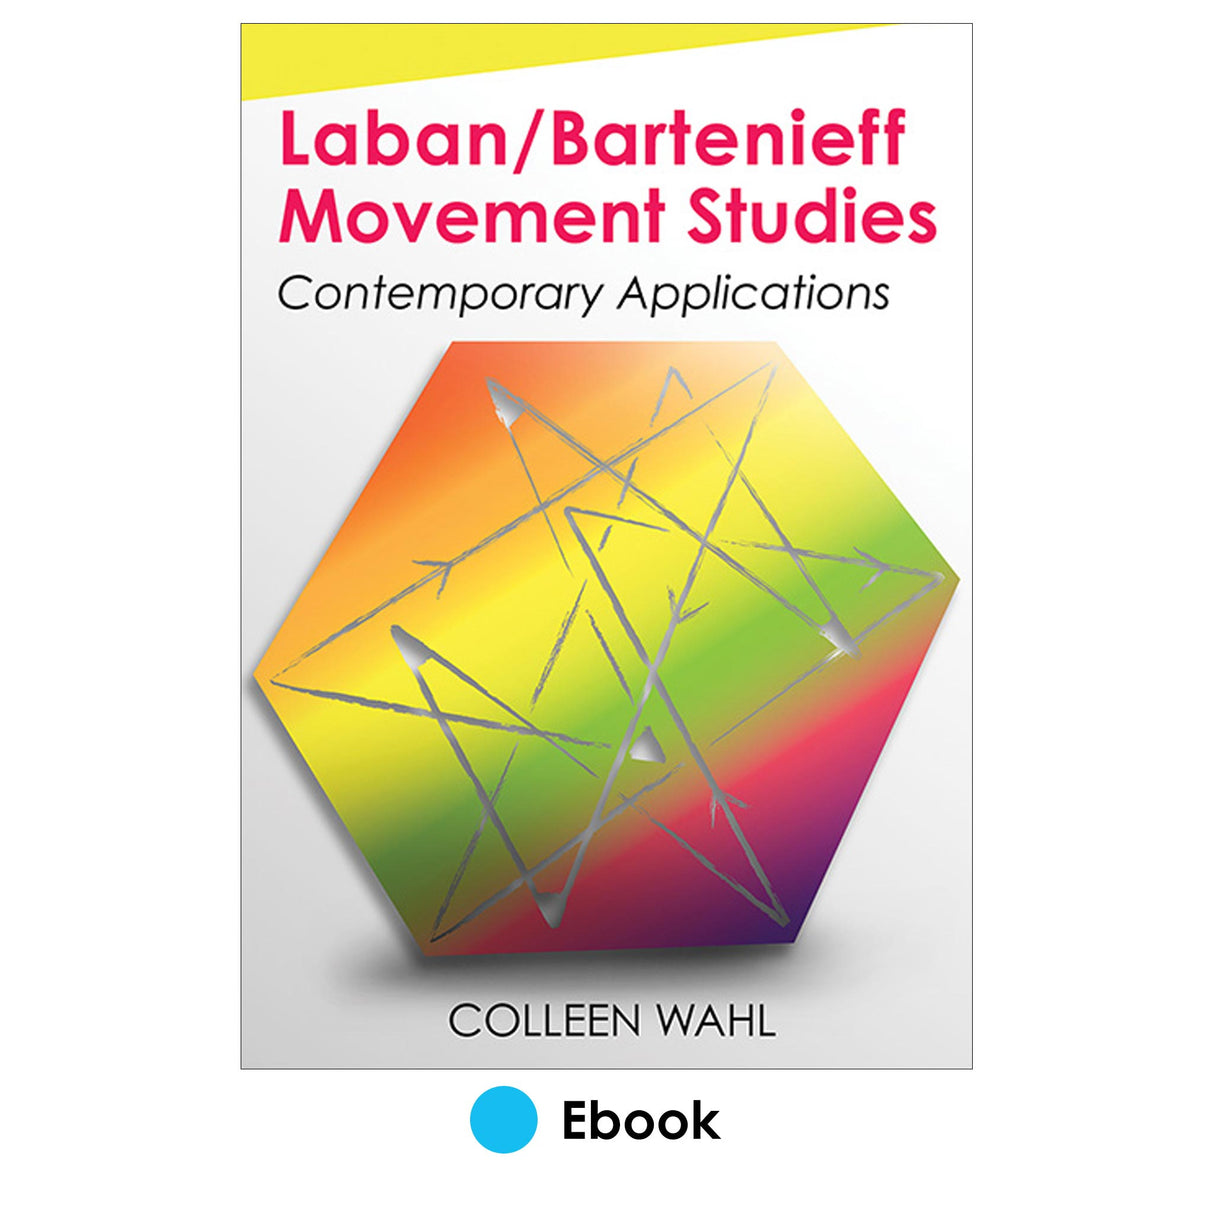 Laban/Bartenieff Movement Studies epub